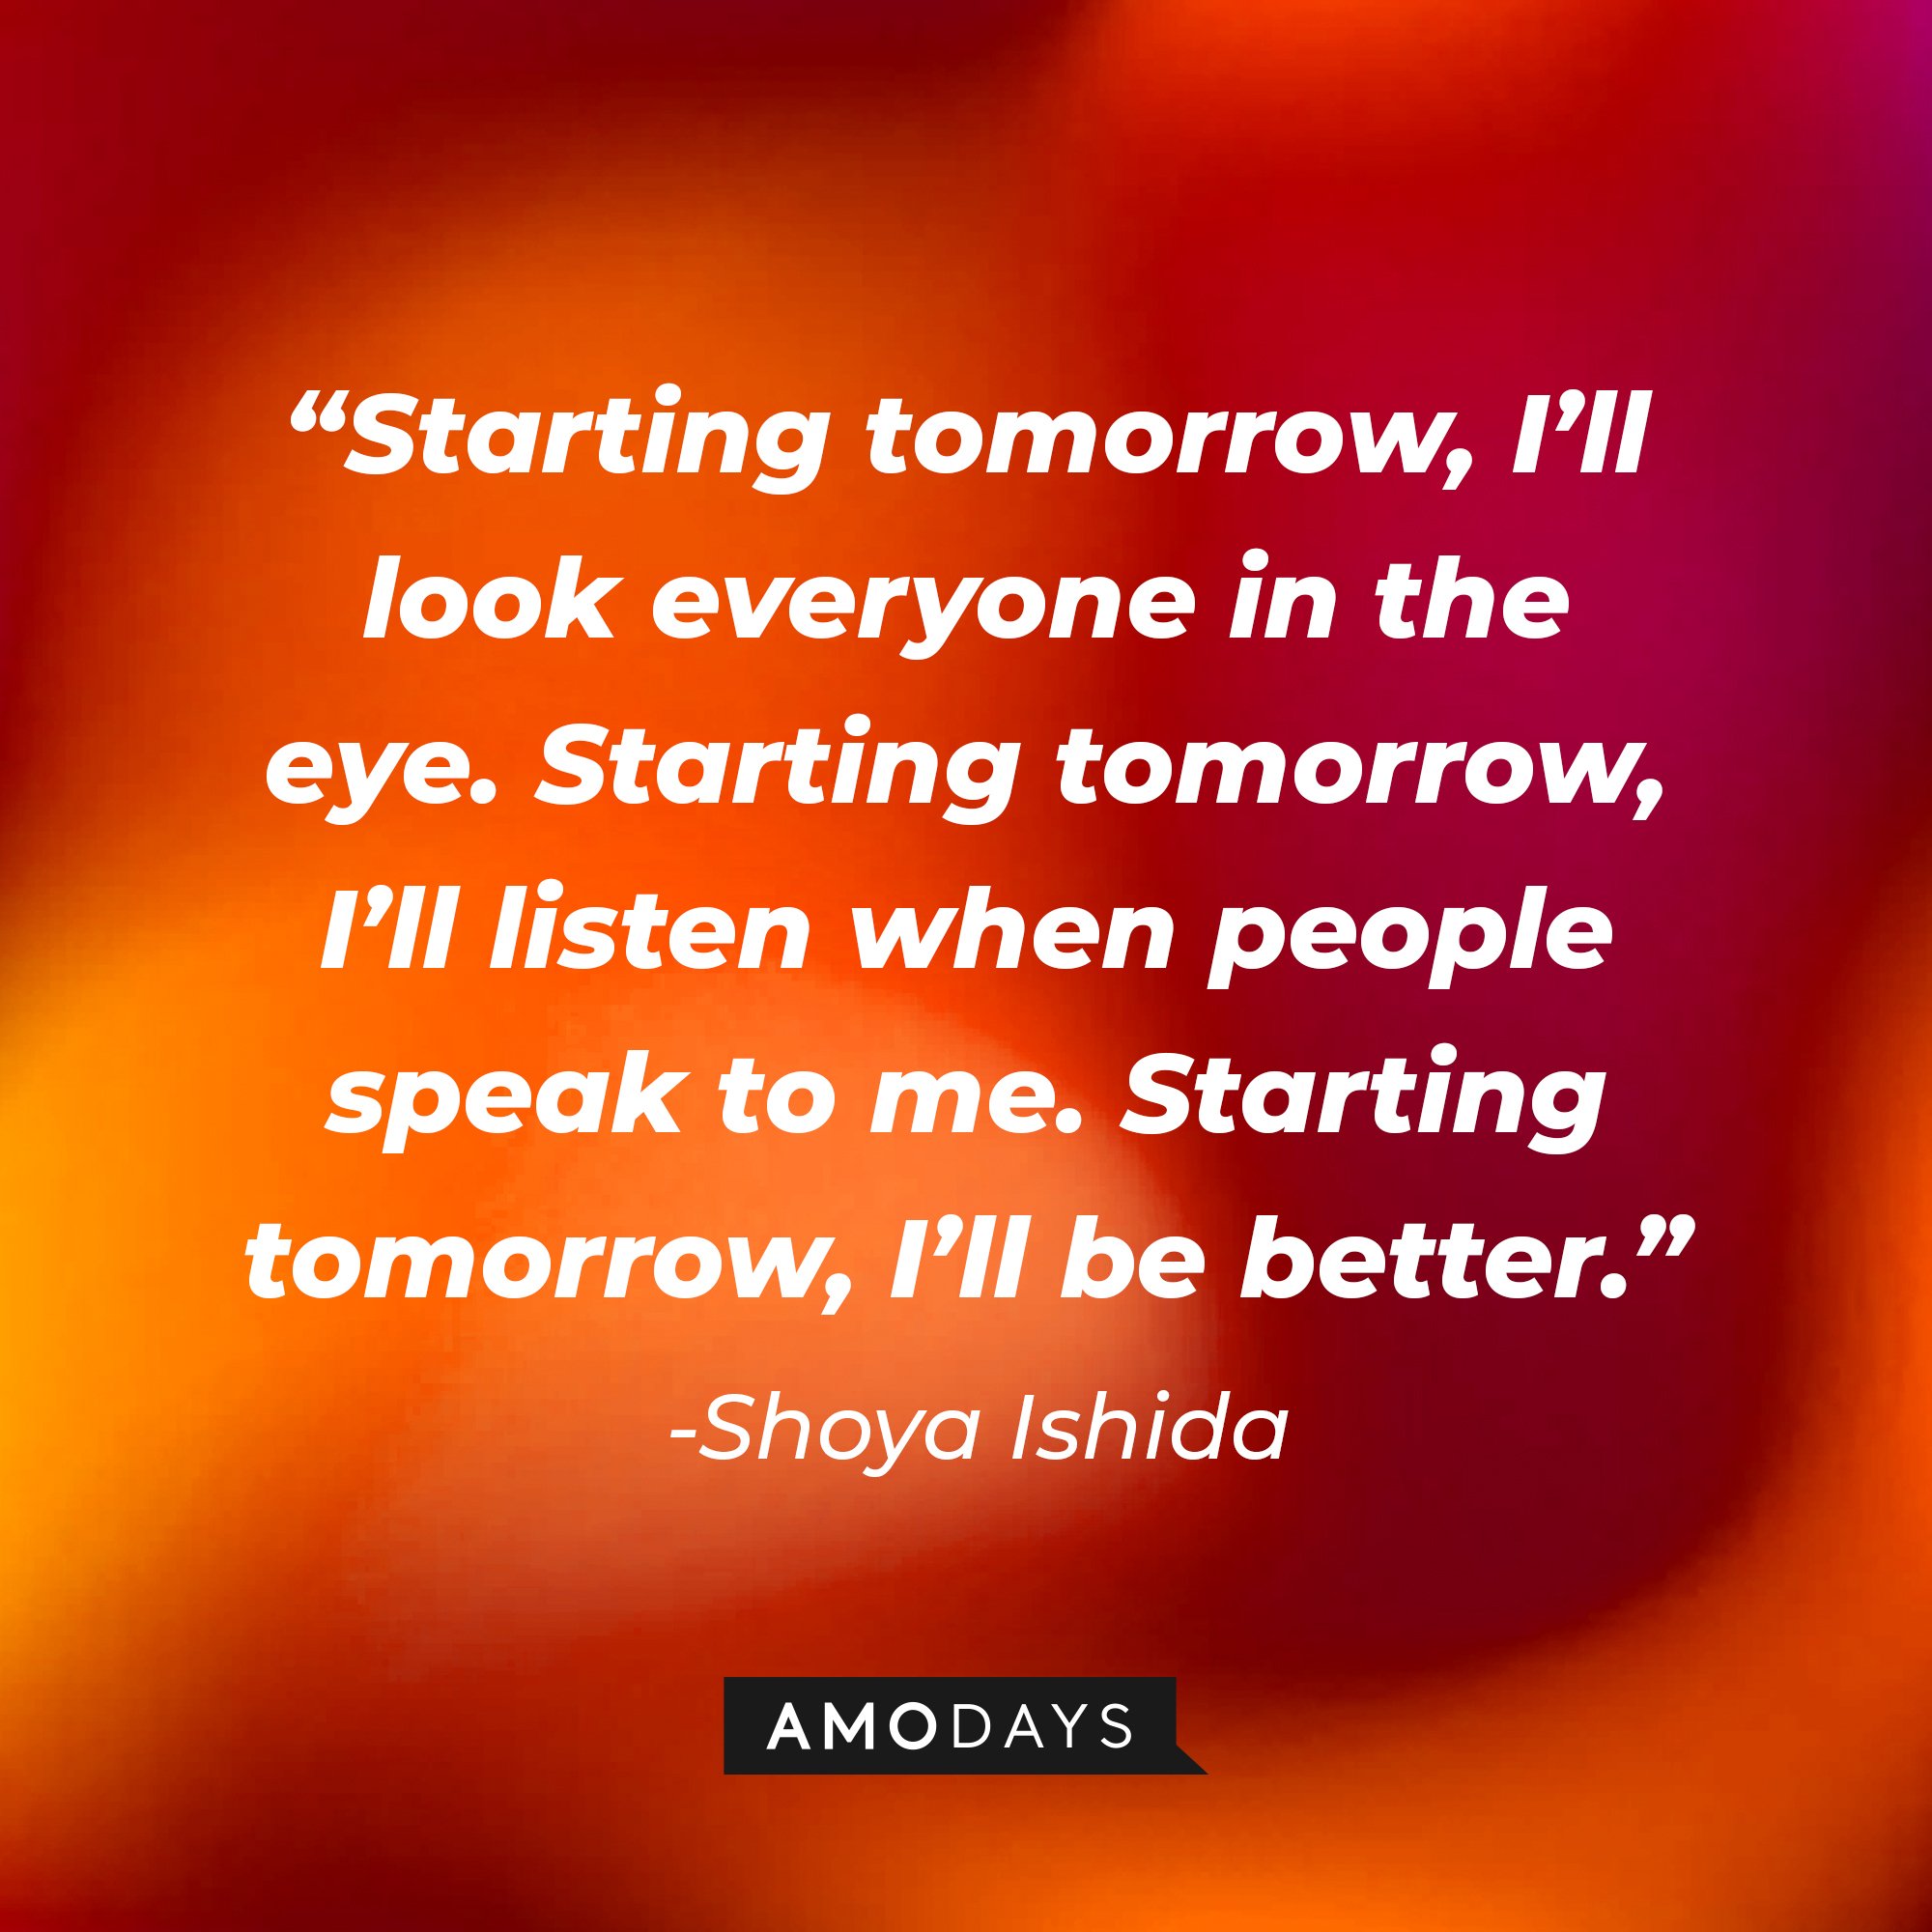 Shoya Ishida’s quote: "Starting tomorrow, I’ll look everyone in the eye. Starting tomorrow, I’ll listen when people speak to me. Starting tomorrow, I’ll be better." | Image: AmoDays  